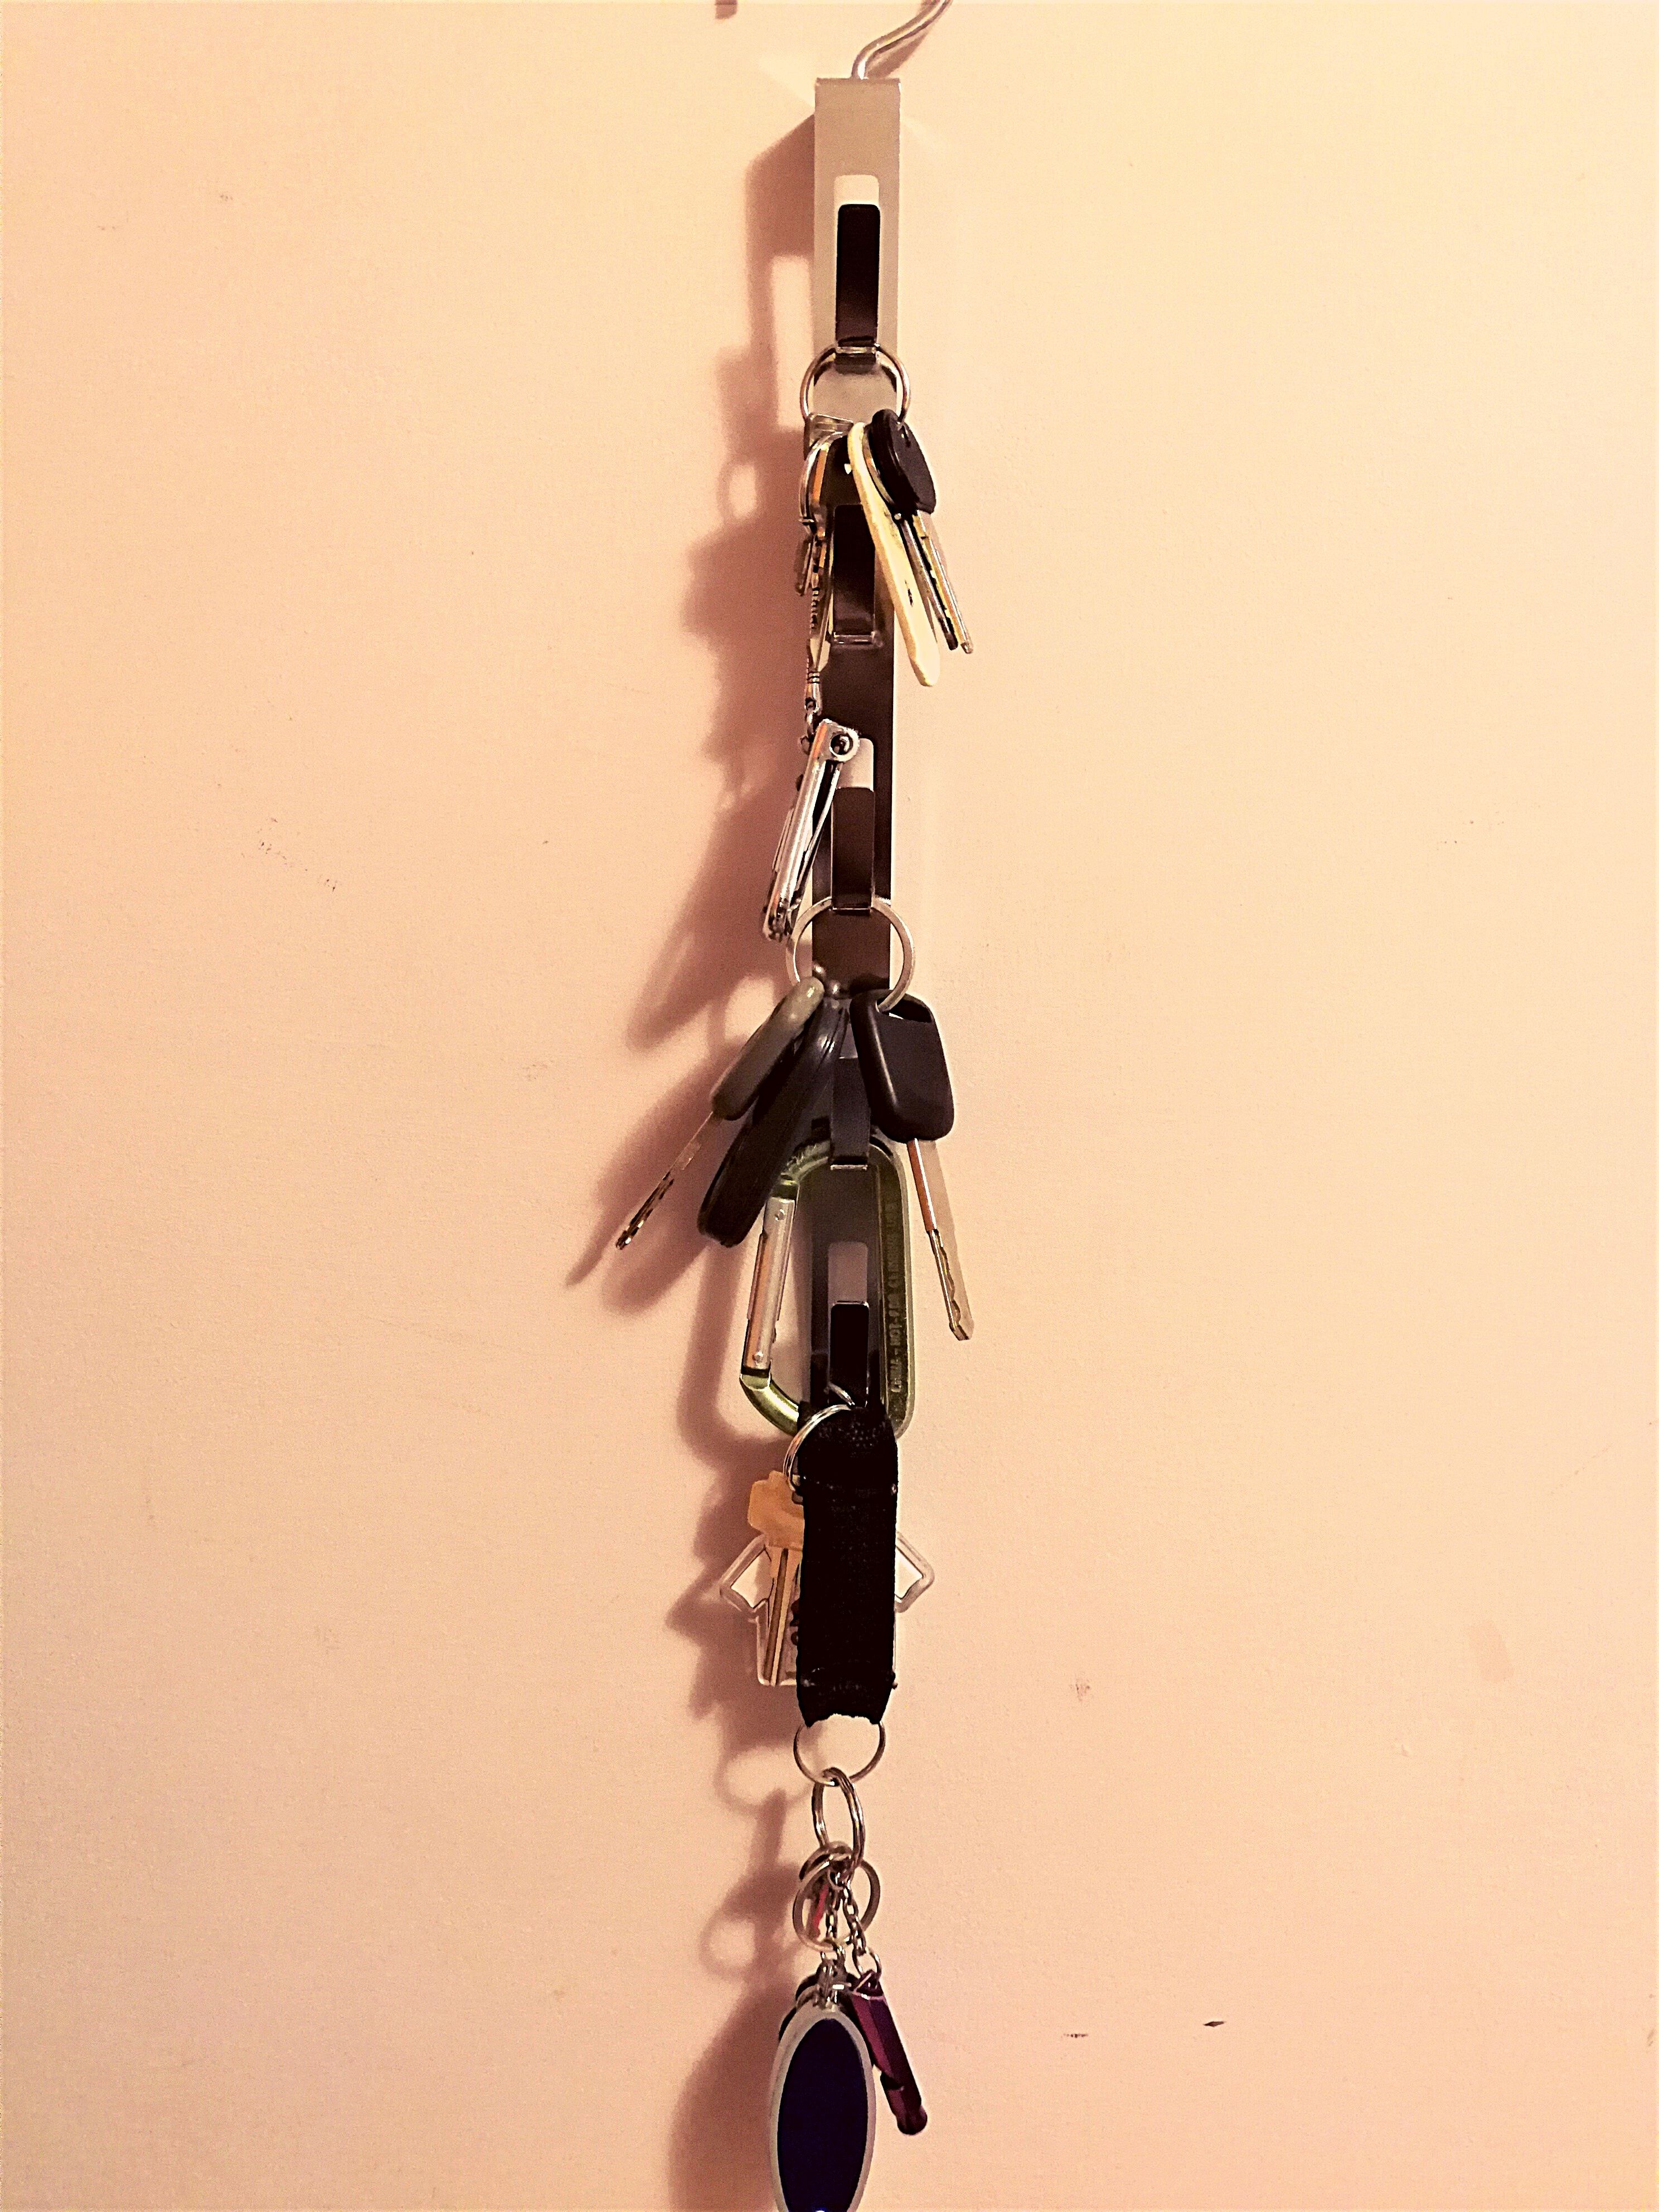 D'klutz multifuntional hanger that hangs keys